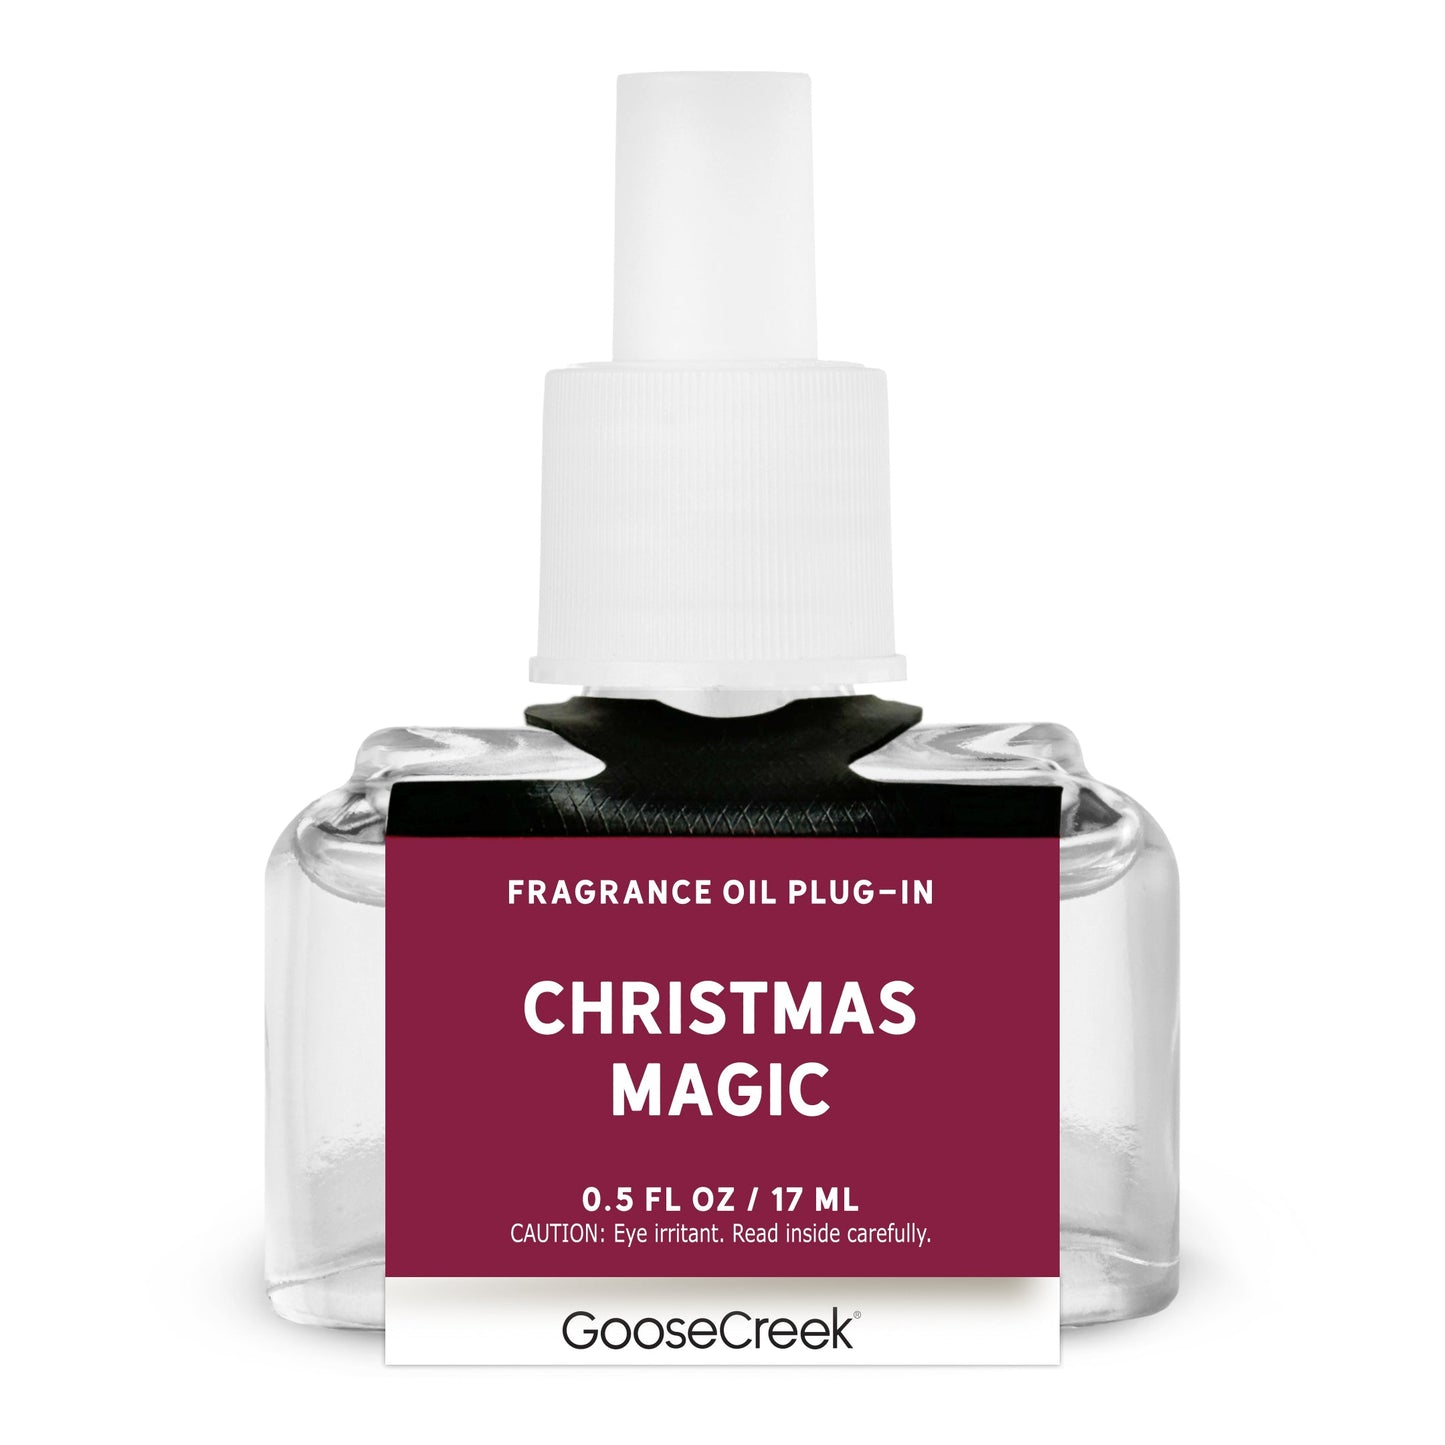 Christmas Spirit Wax Melts Box. A Mix of Holiday Home Fragrances